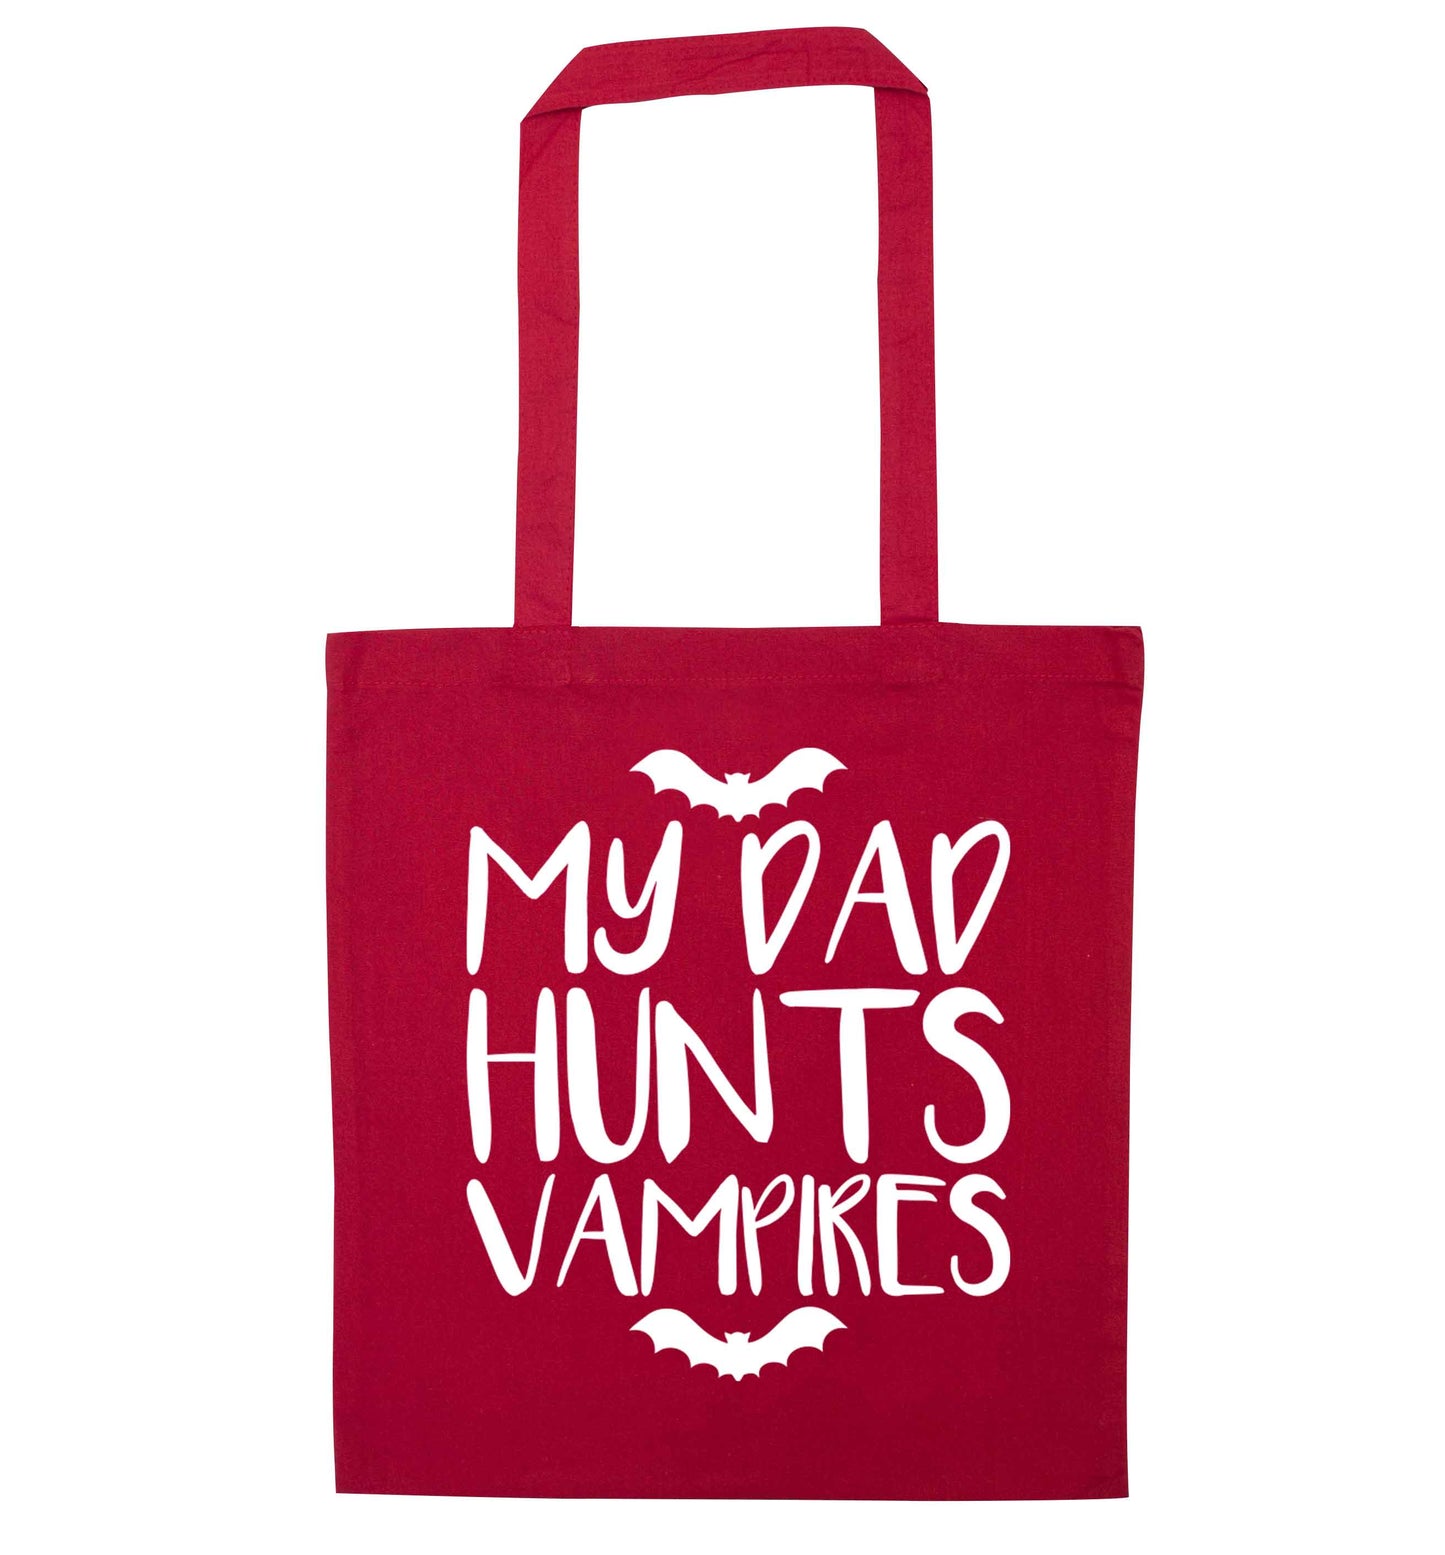 My dad hunts vampires red tote bag